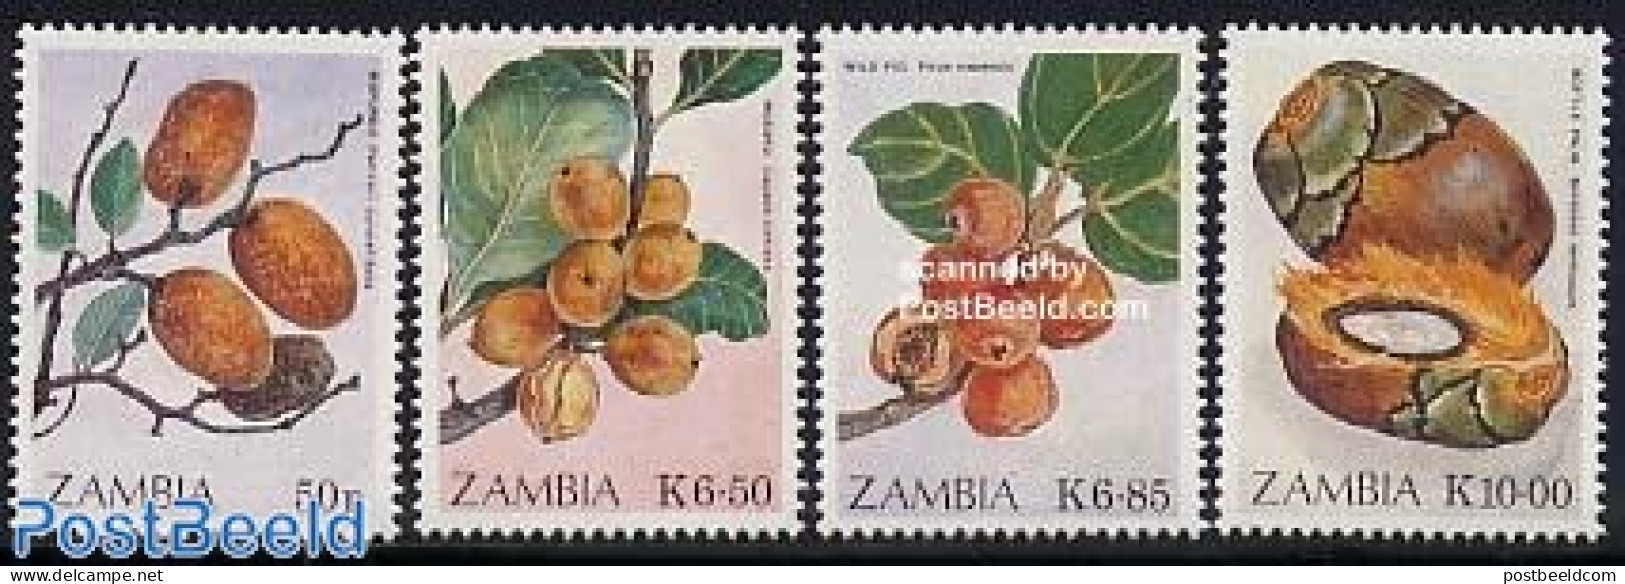 Zambia 1989 Fruits 4v, Mint NH, Nature - Fruit - Obst & Früchte